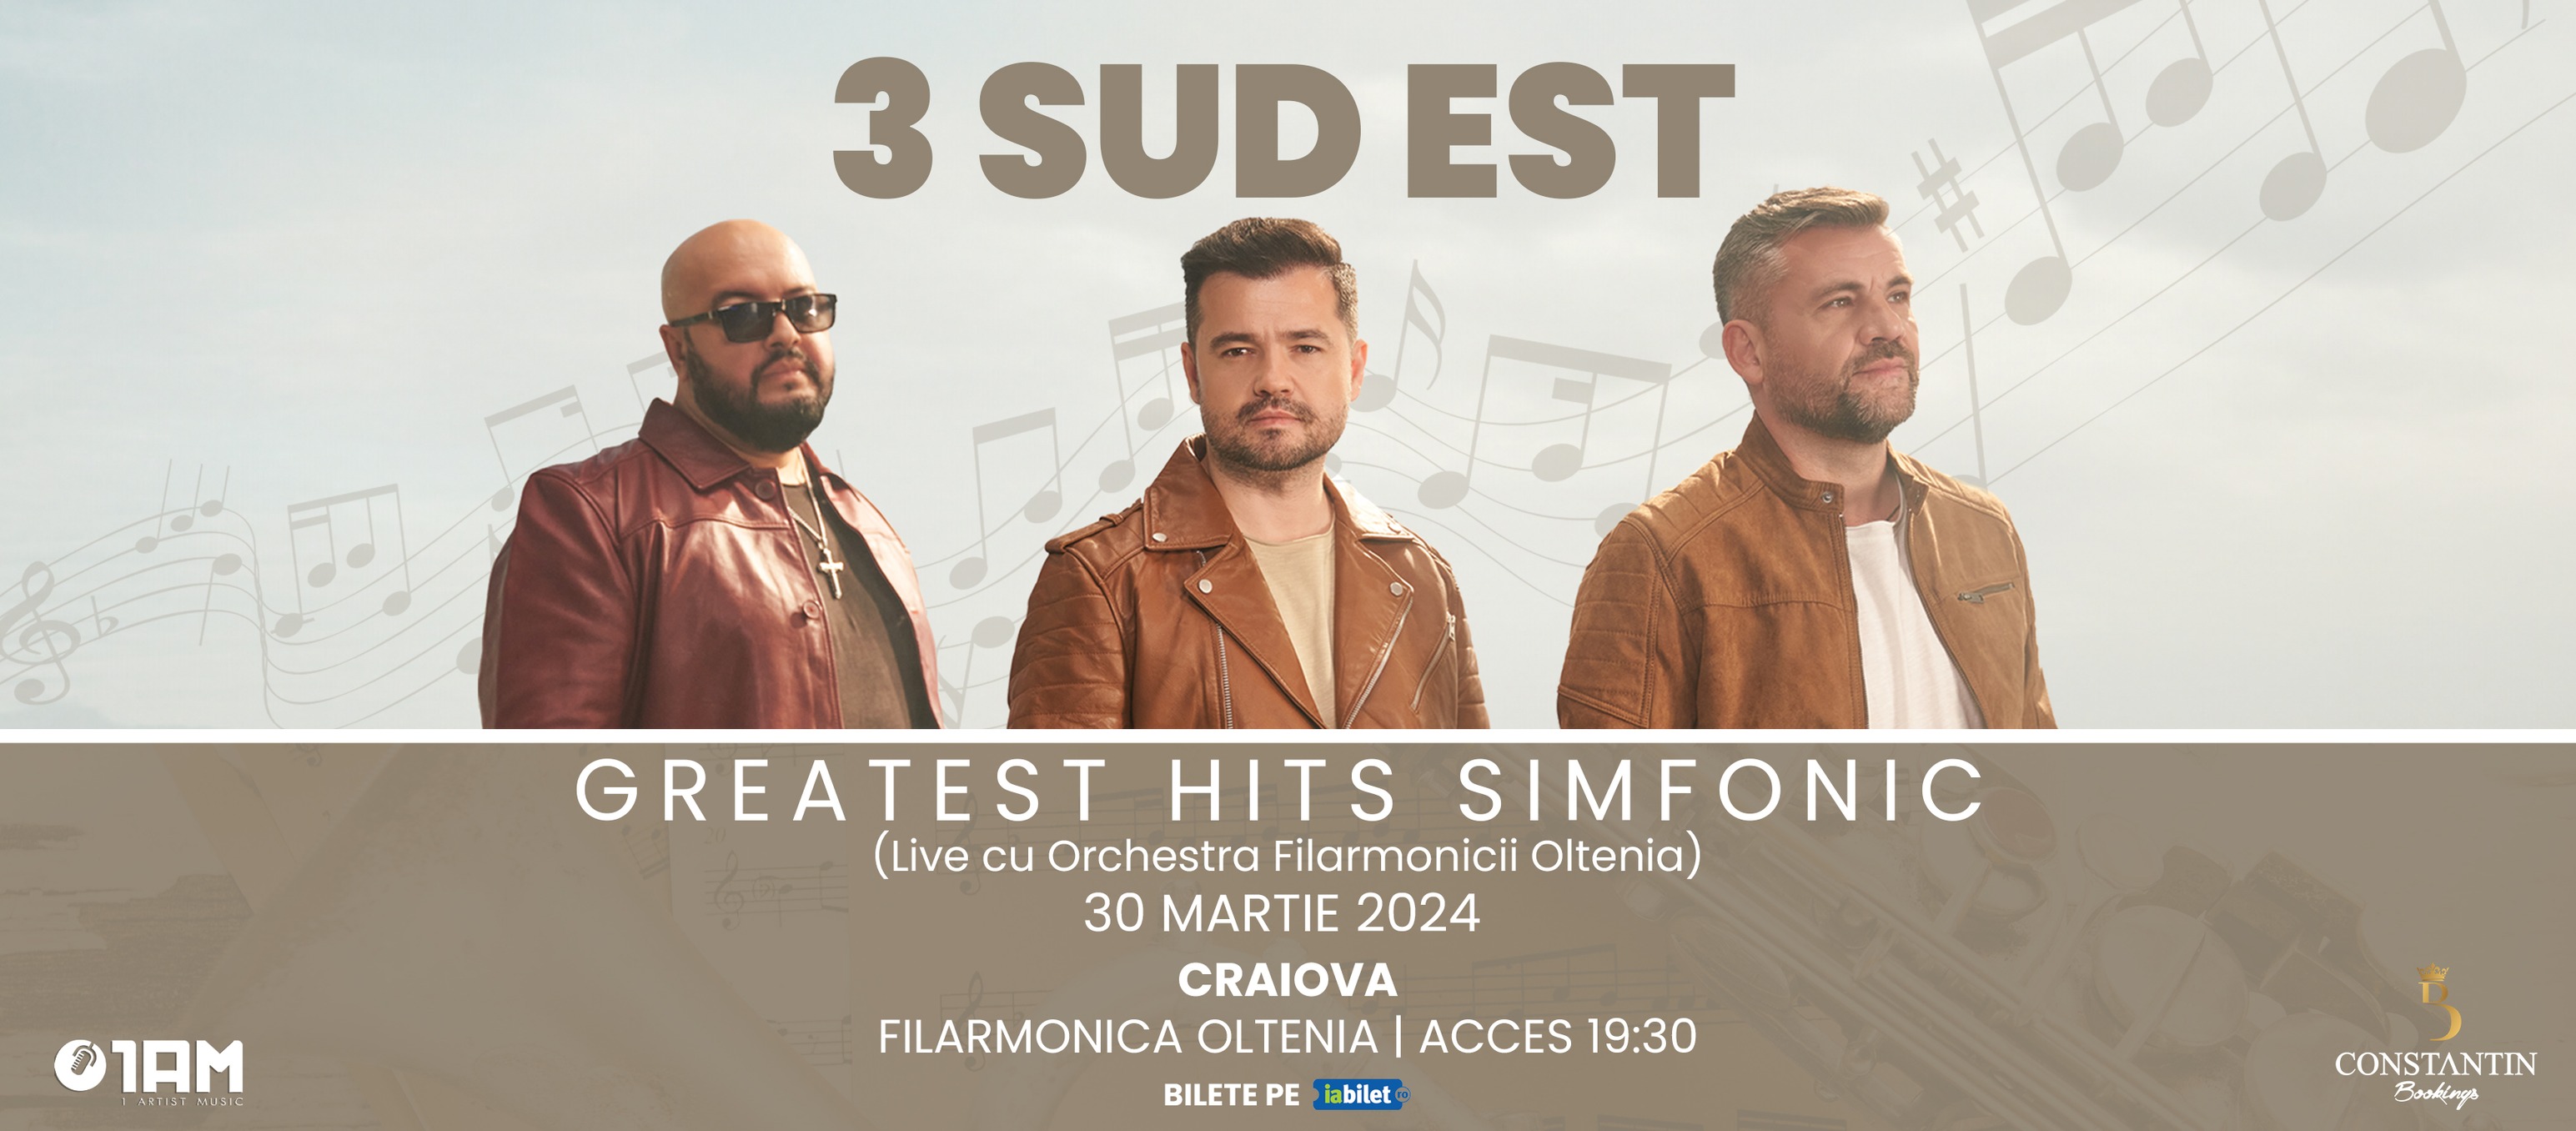 3 SUD EST - "GREATEST HITS SIMFONIC" @ CRAIOVA - FILARMONICA OLTENIA